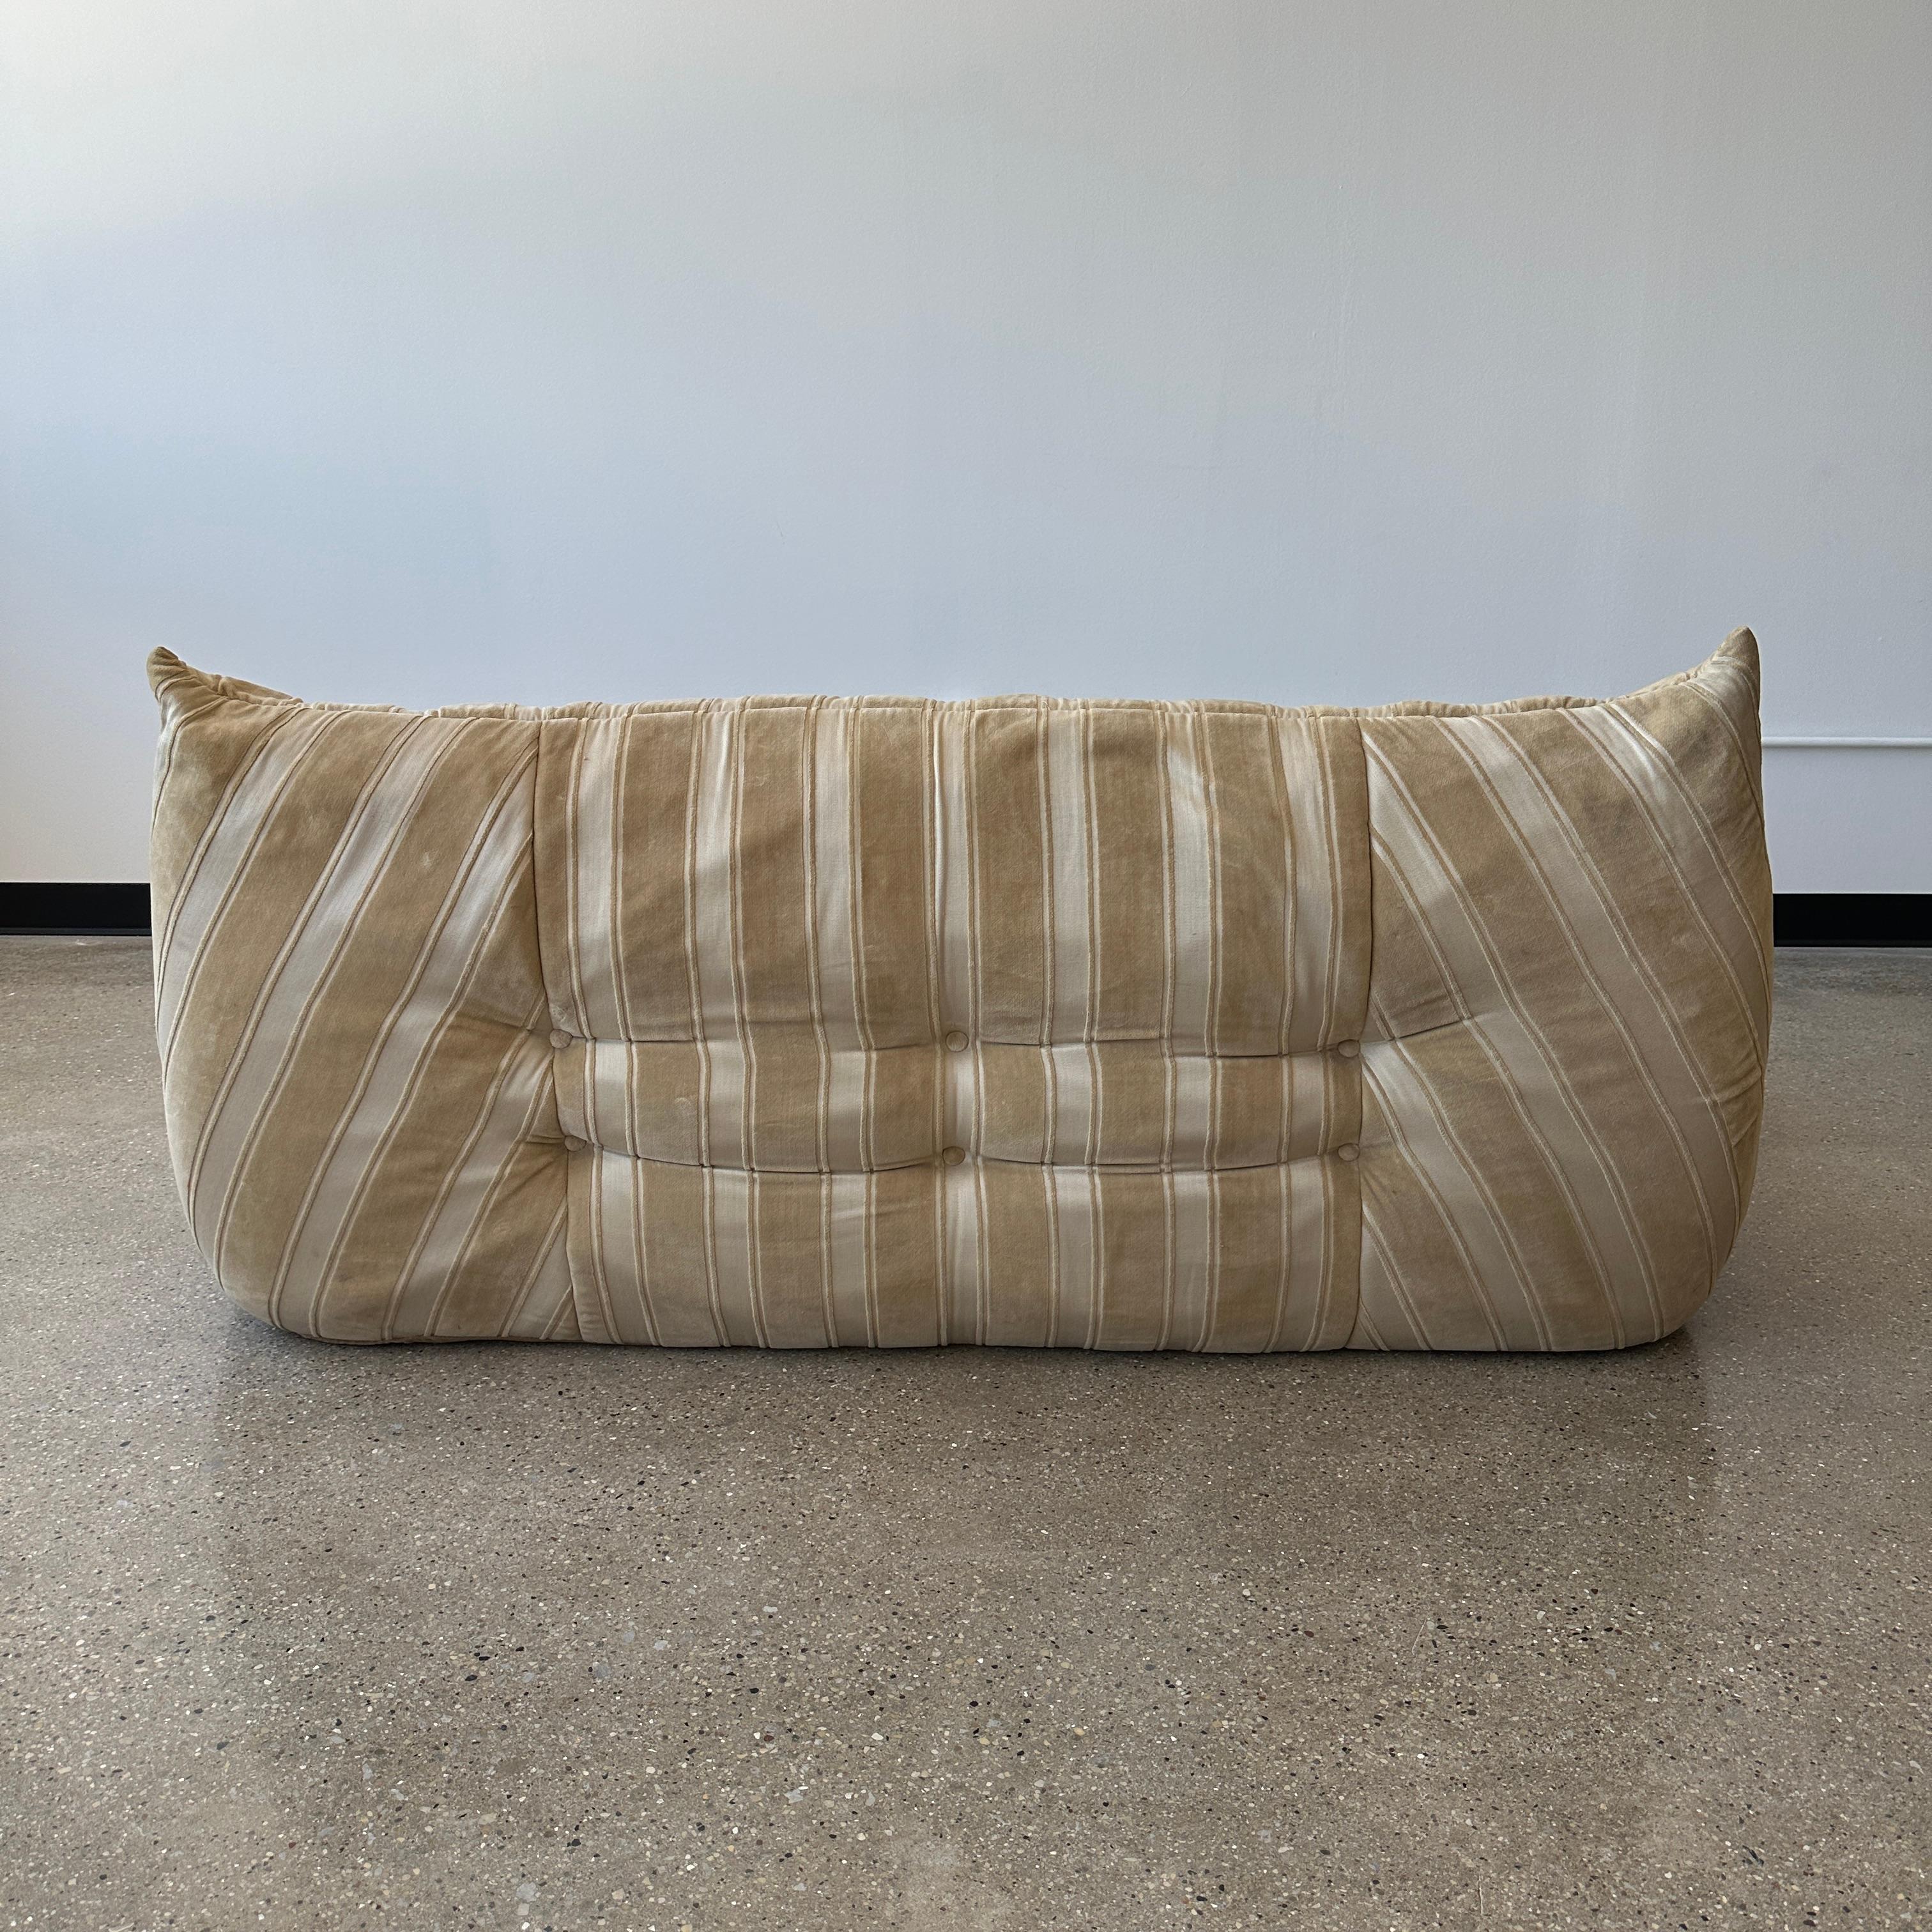 Late 20th Century Michael Ducaroy “Togo” Sofa For Sale